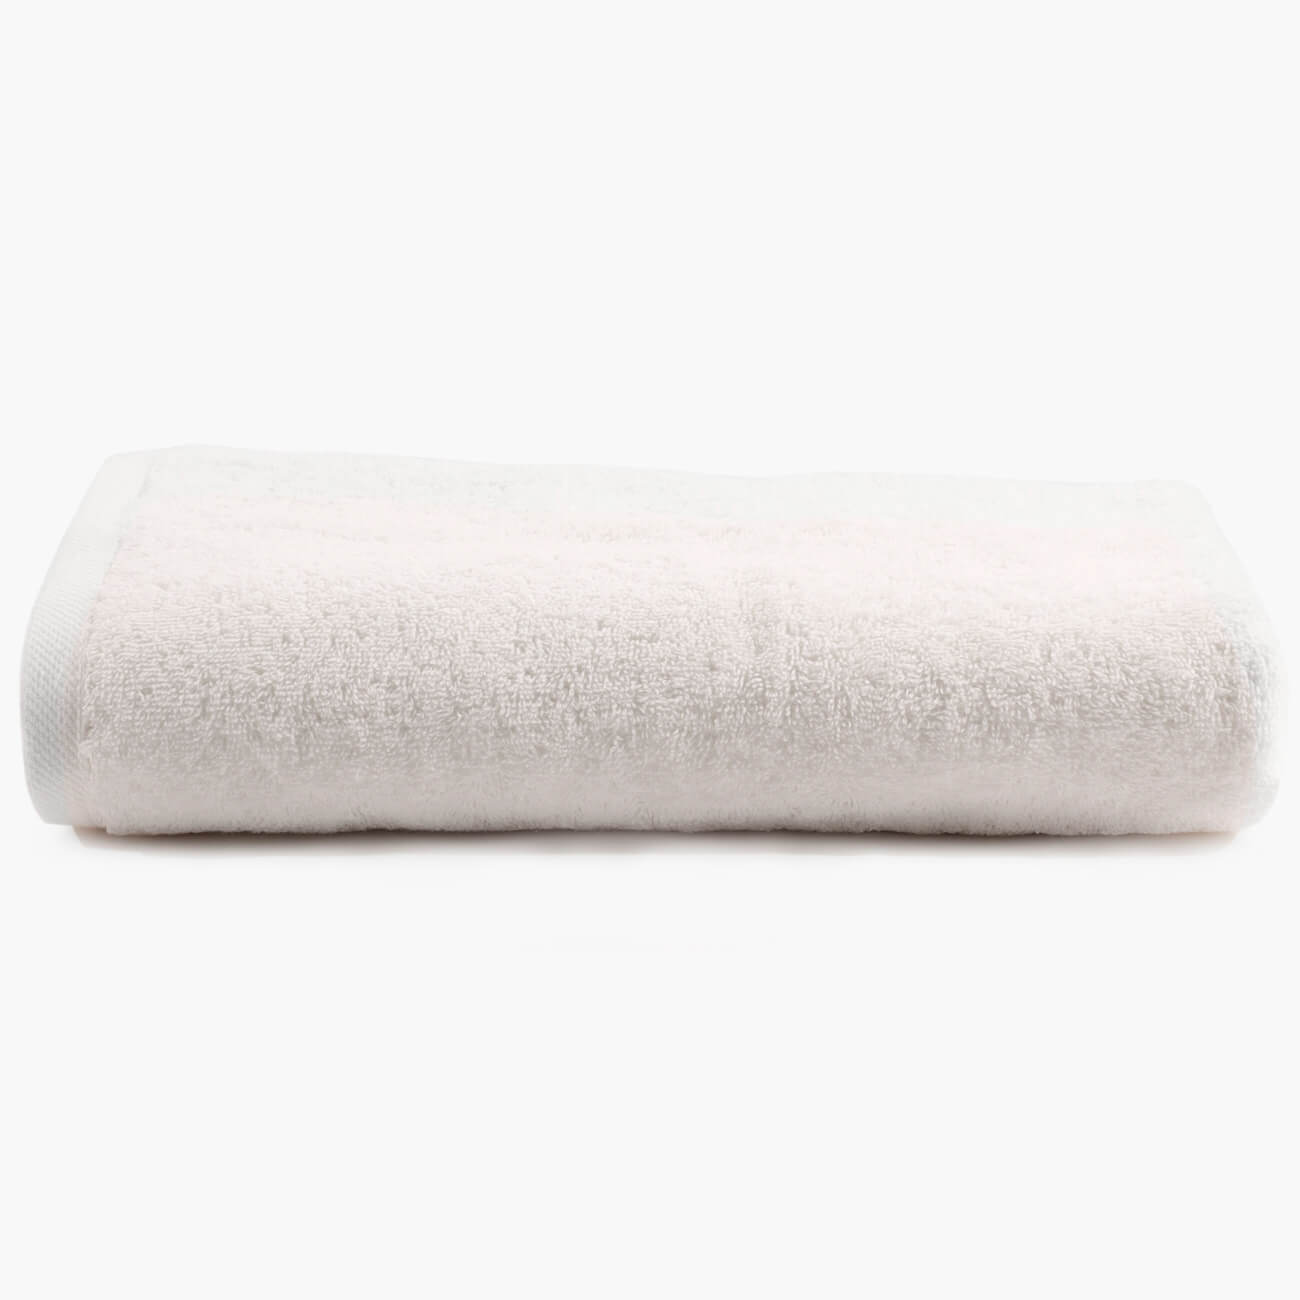 Полотенце, 70х140 см, хлопок, молочное, Wellness натуральное бумажное полотенце tork